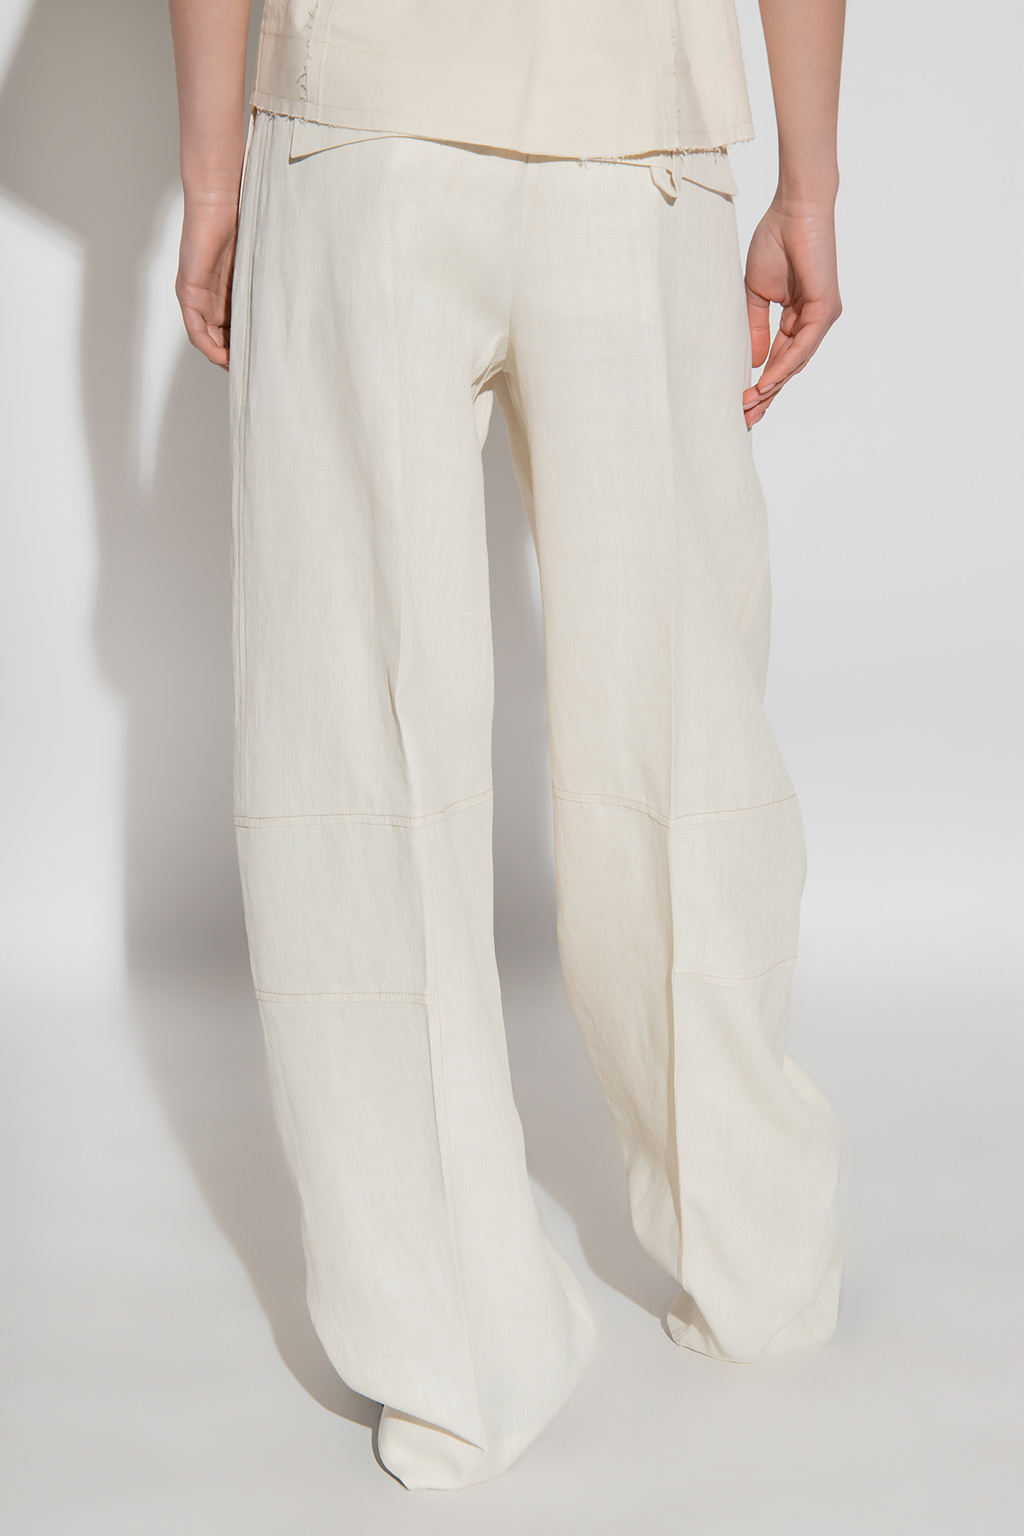 Jacquemus ‘Plidao’ pleat-front trousers